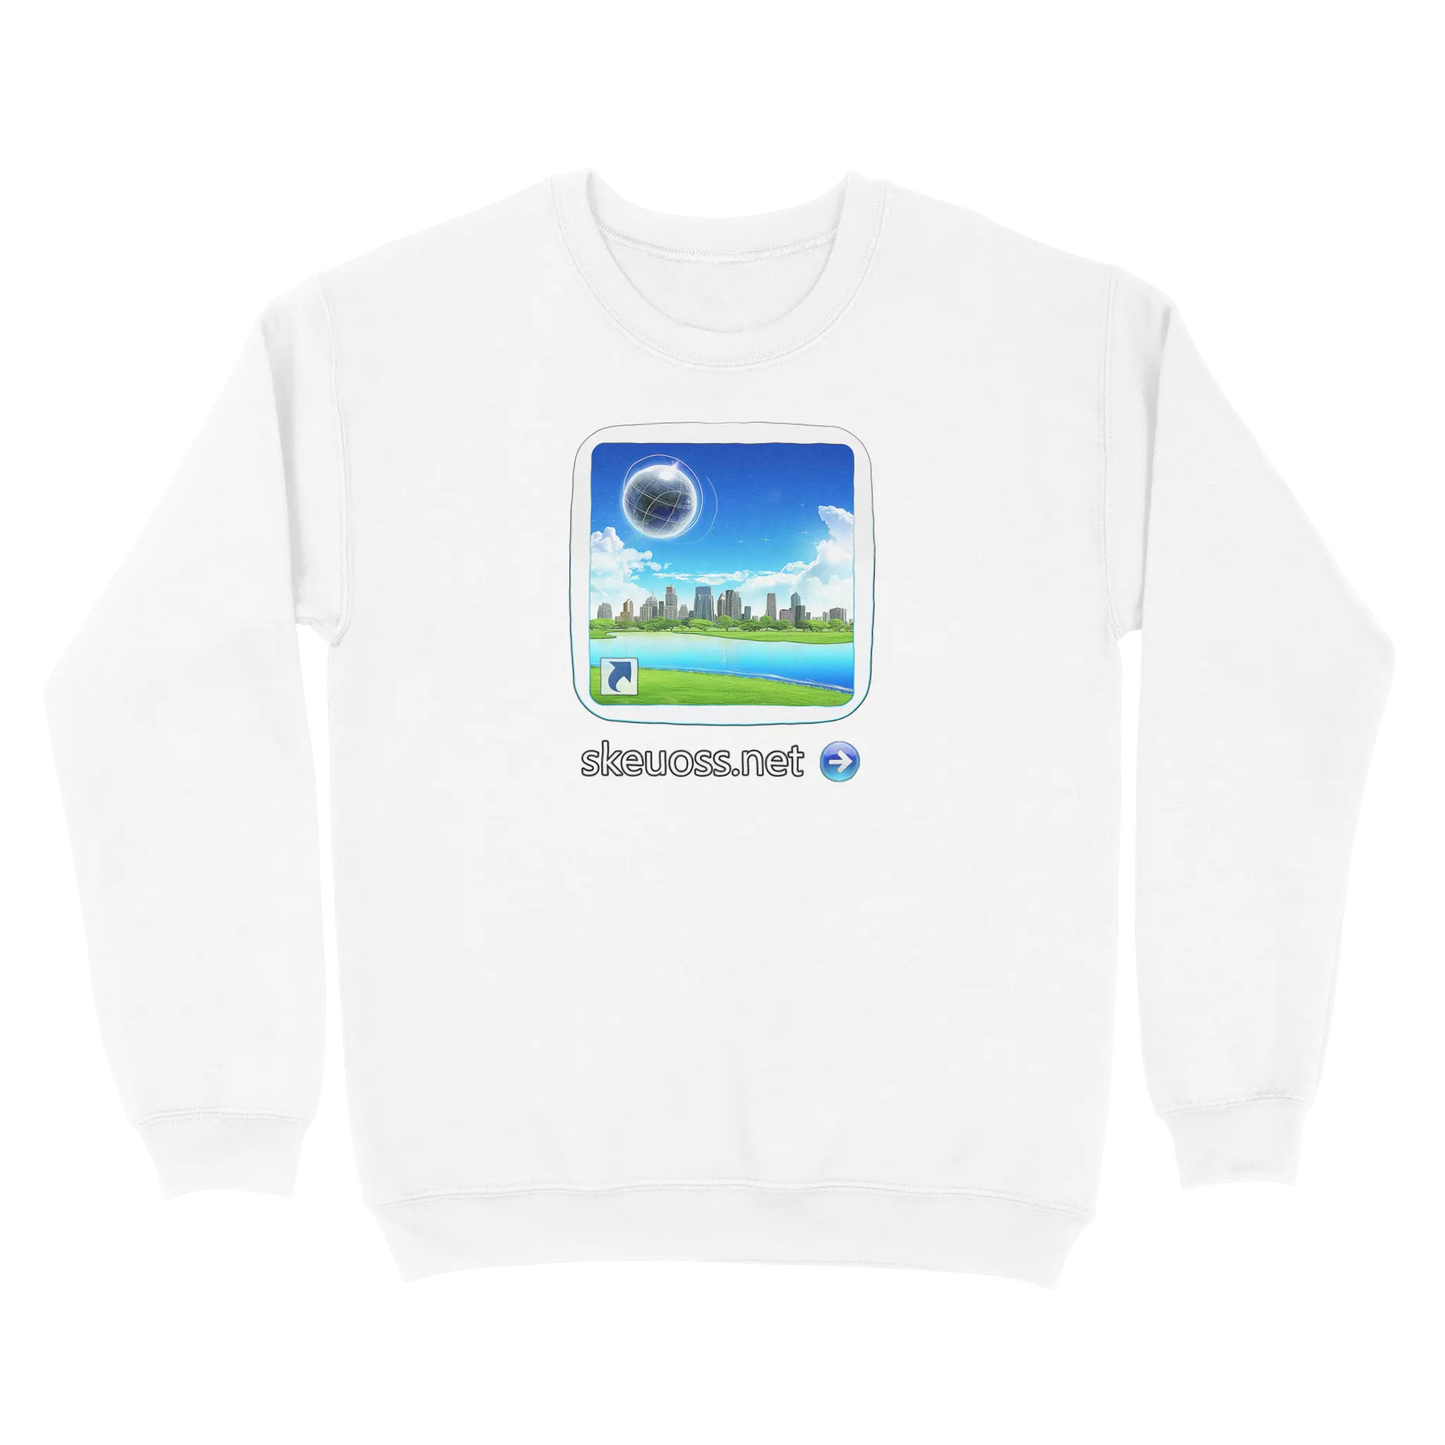 Frutiger Aero Sweatshirt - User Login Collection - User 381